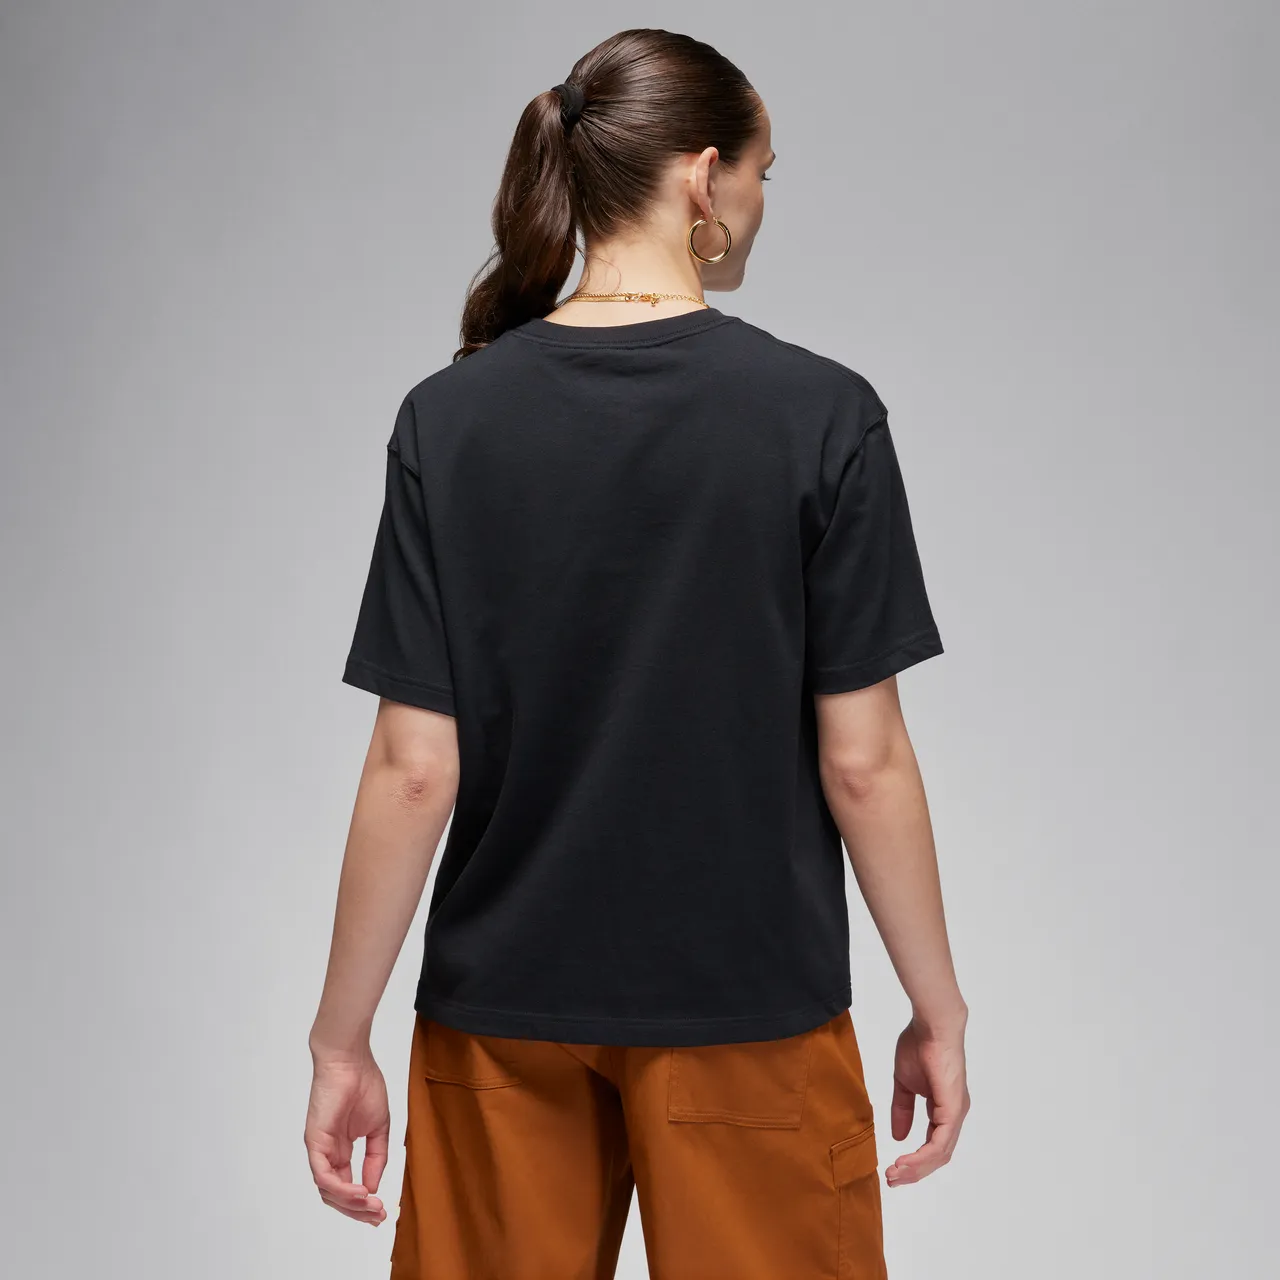 Jordan Women's Collage T-Shirt - Black - Cotton